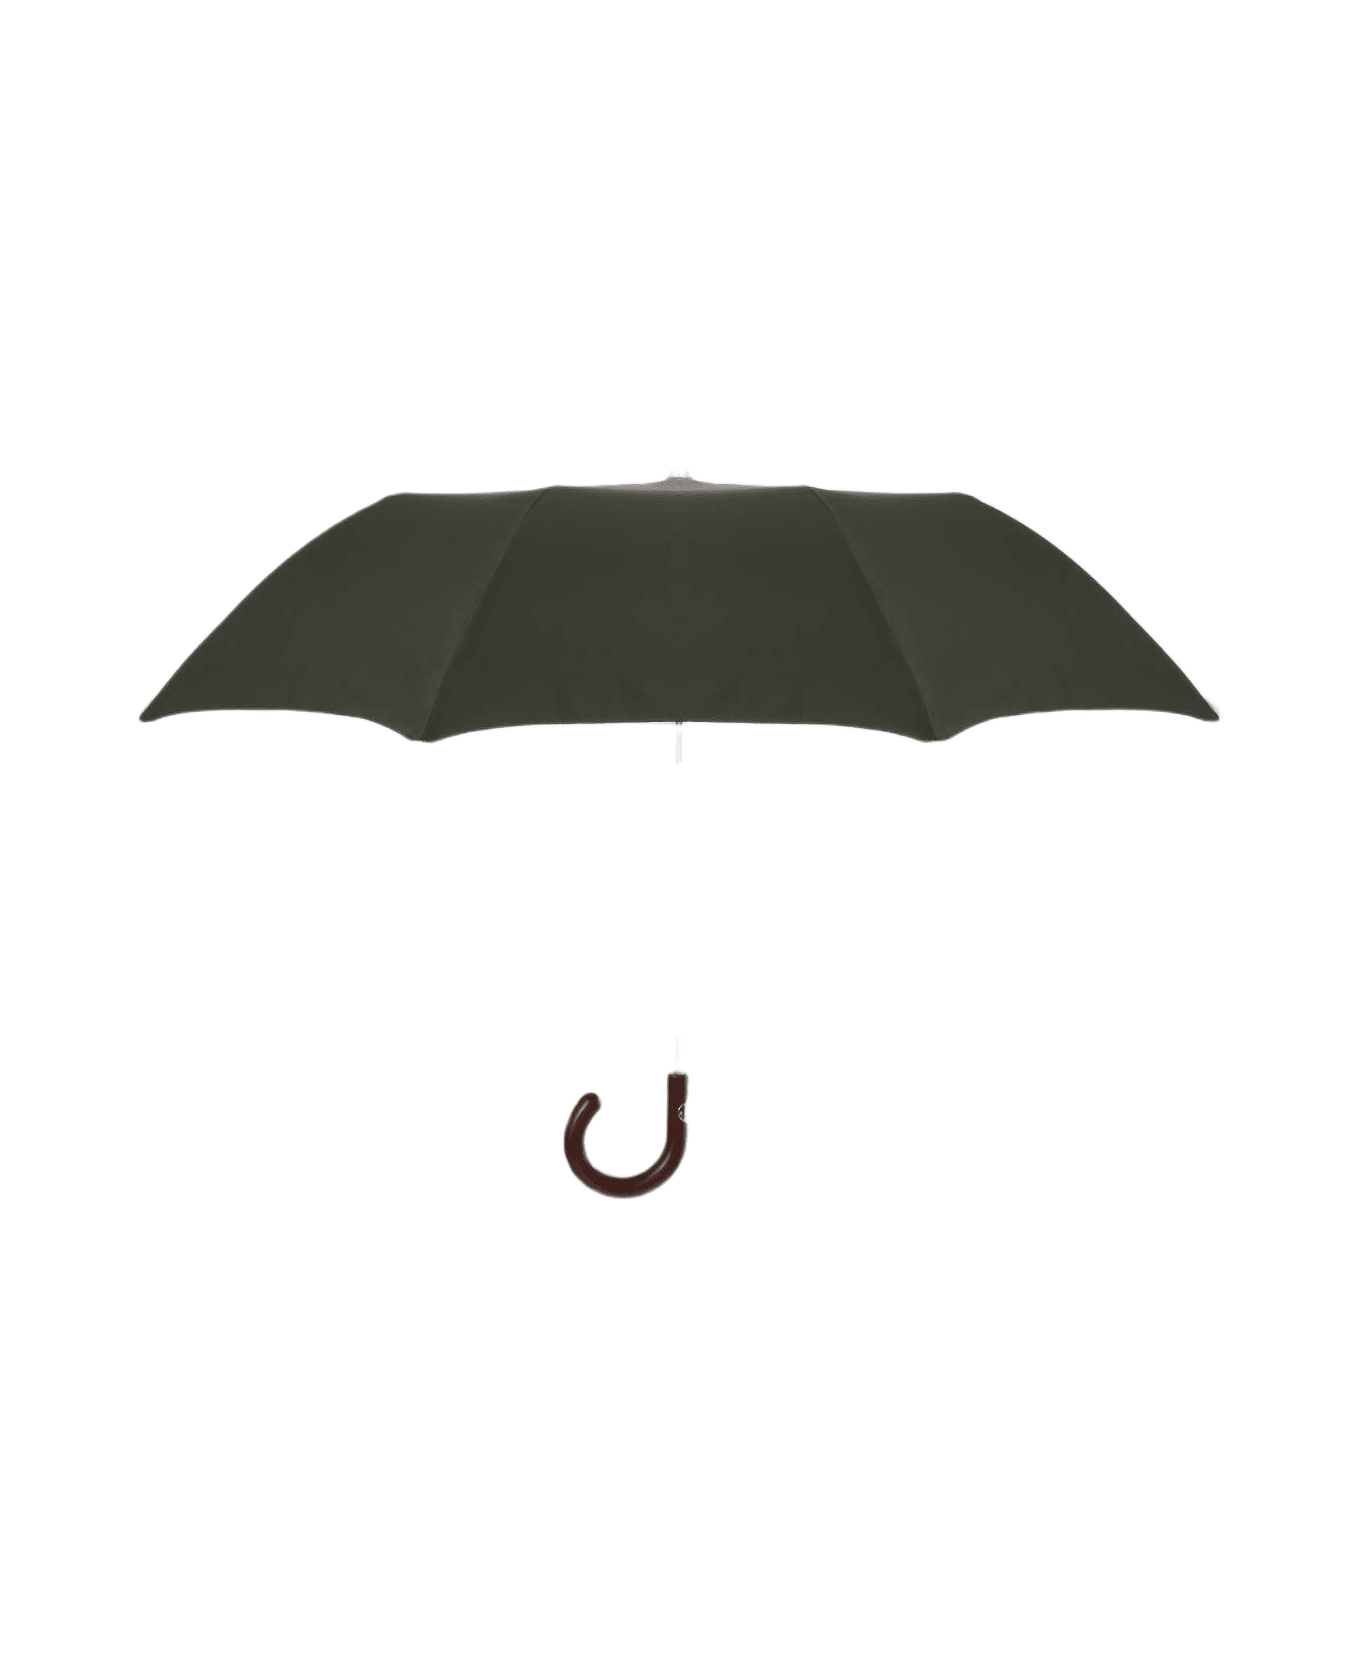 Larusmiani Folding Umbrella Umbrella - Olive 傘